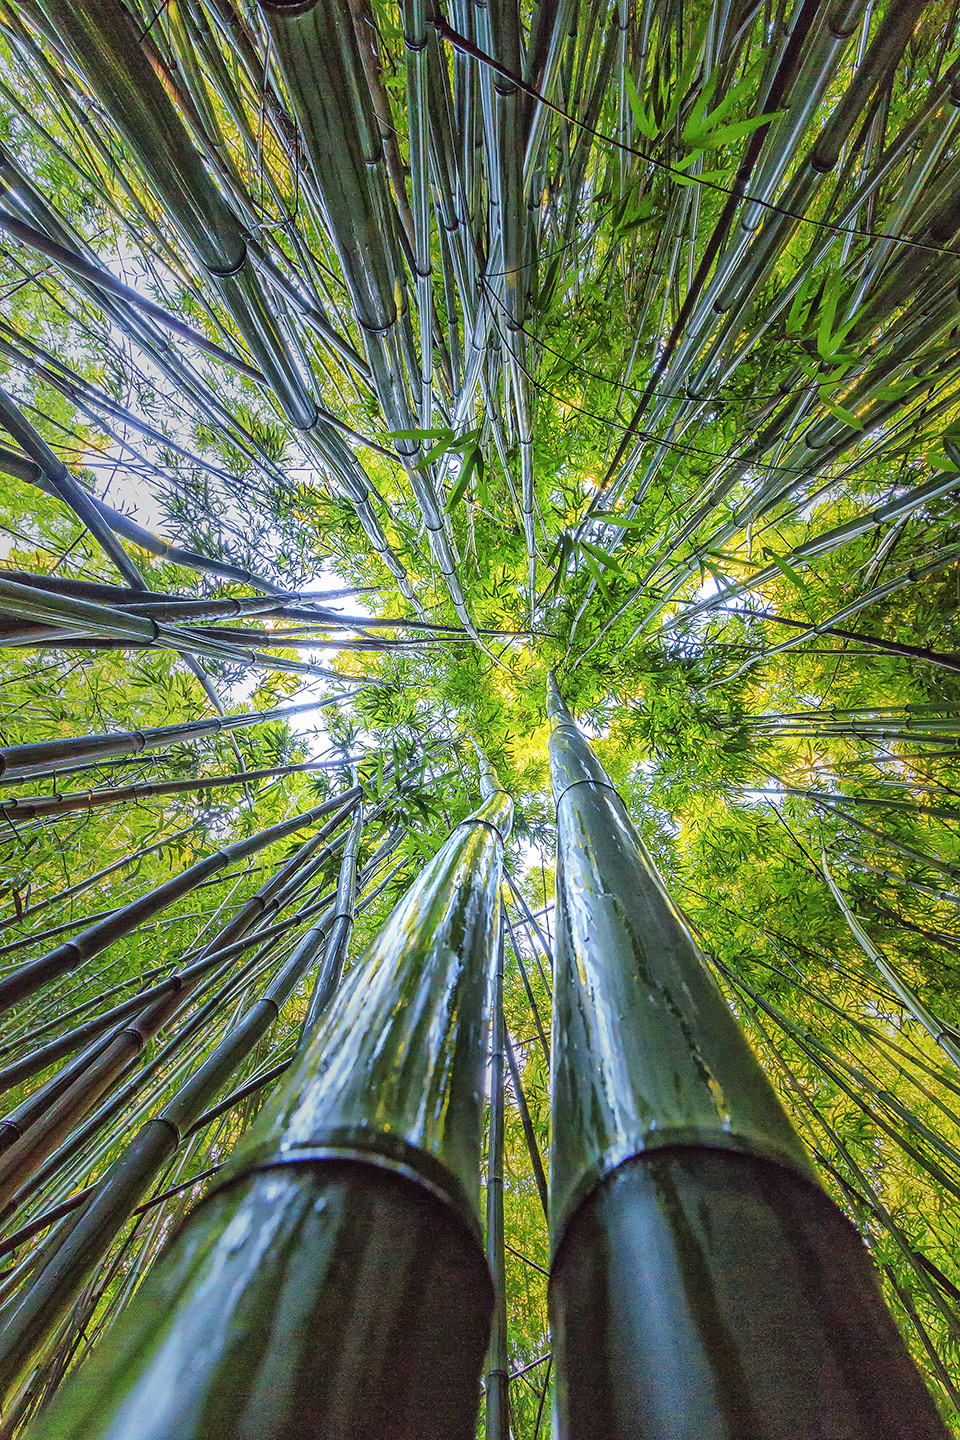 Bamboo 02